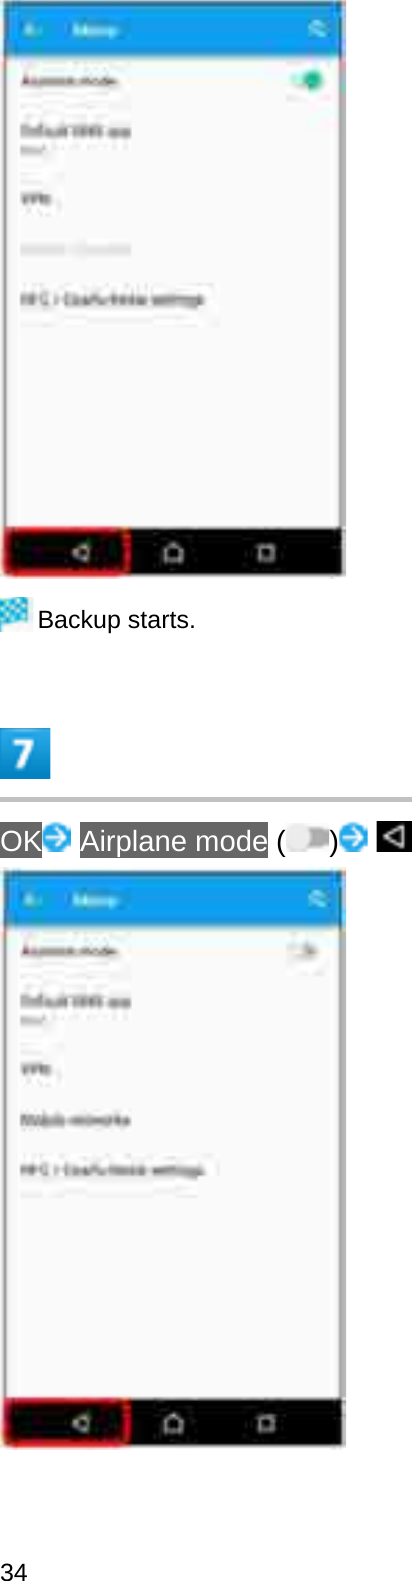 Backup starts.OK Airplane mode ( )34